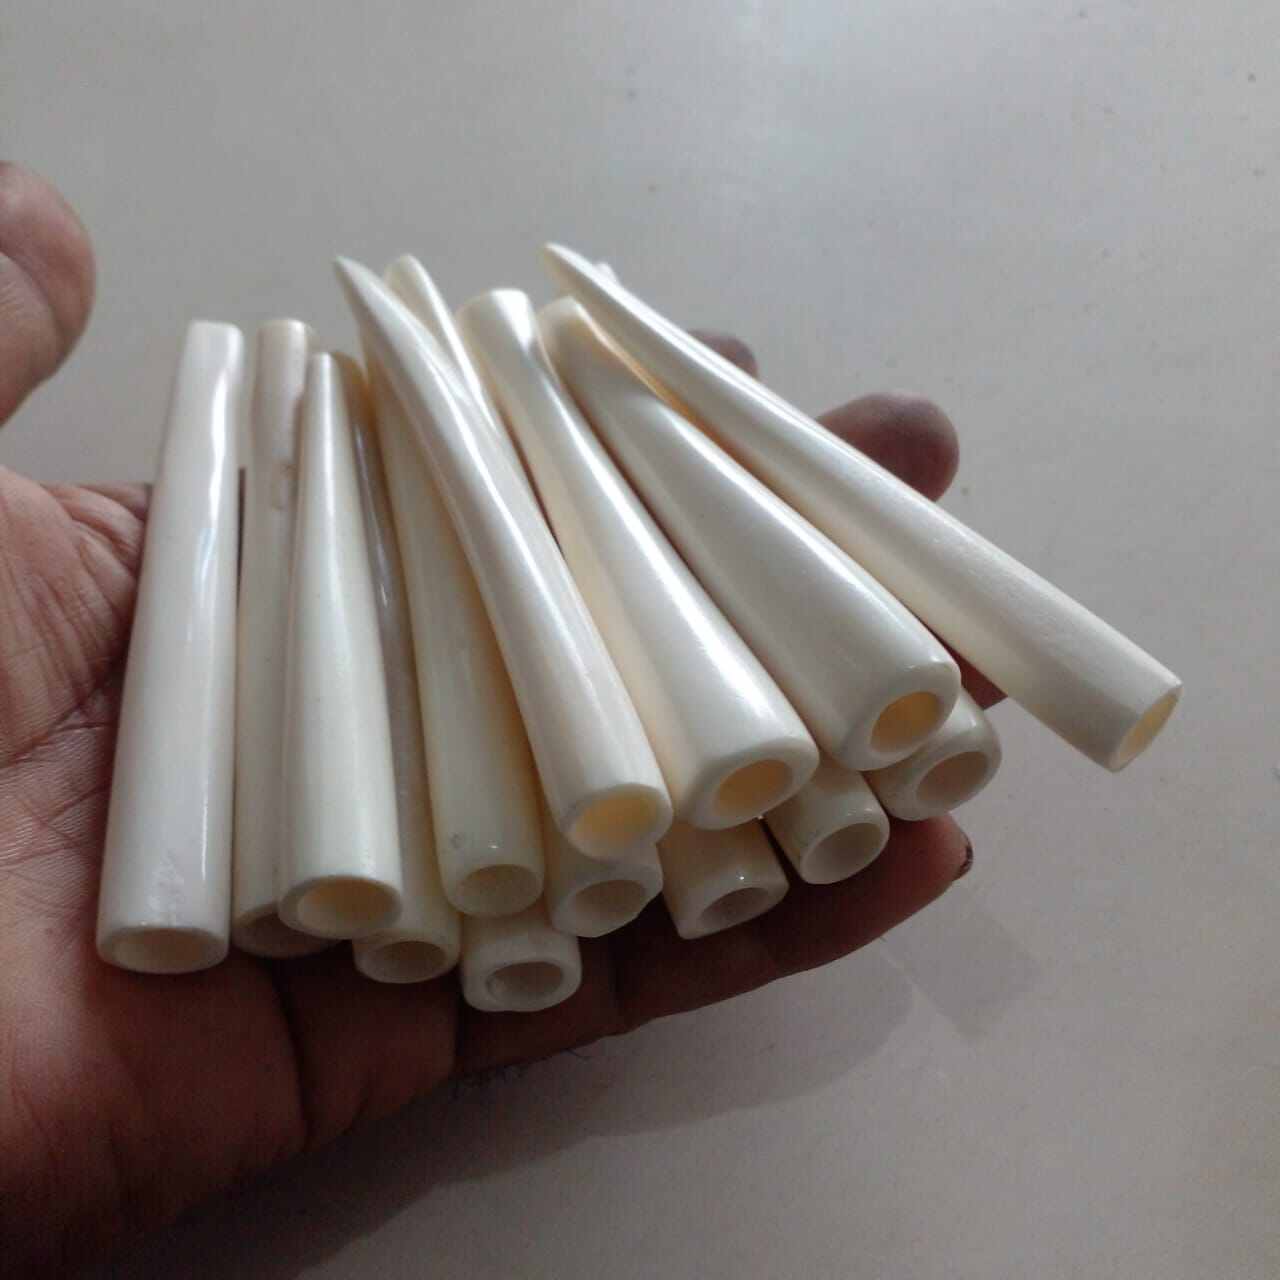 Once pipa rokok bahan tulsap panjang 10.12cm lubang multi.